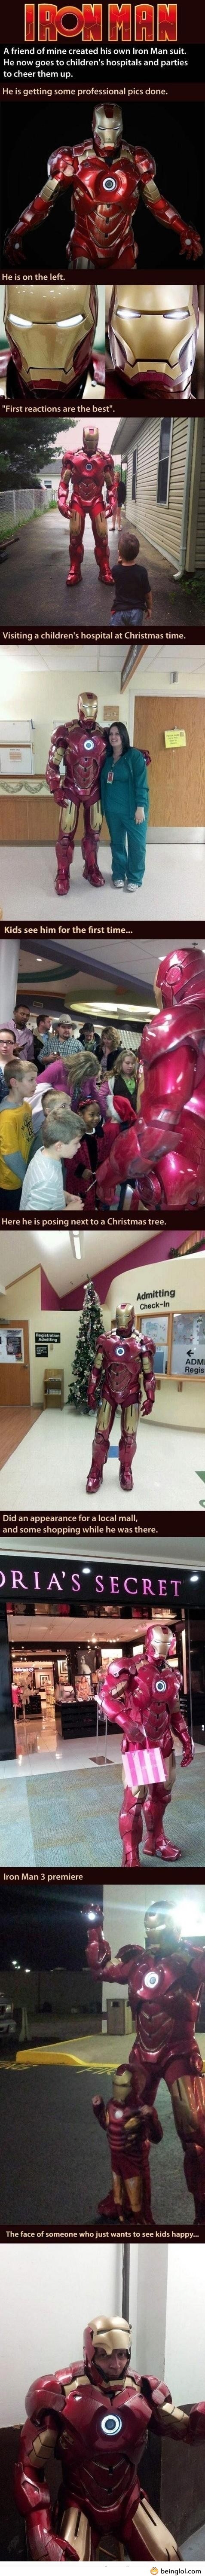 Good Guy Iron Man